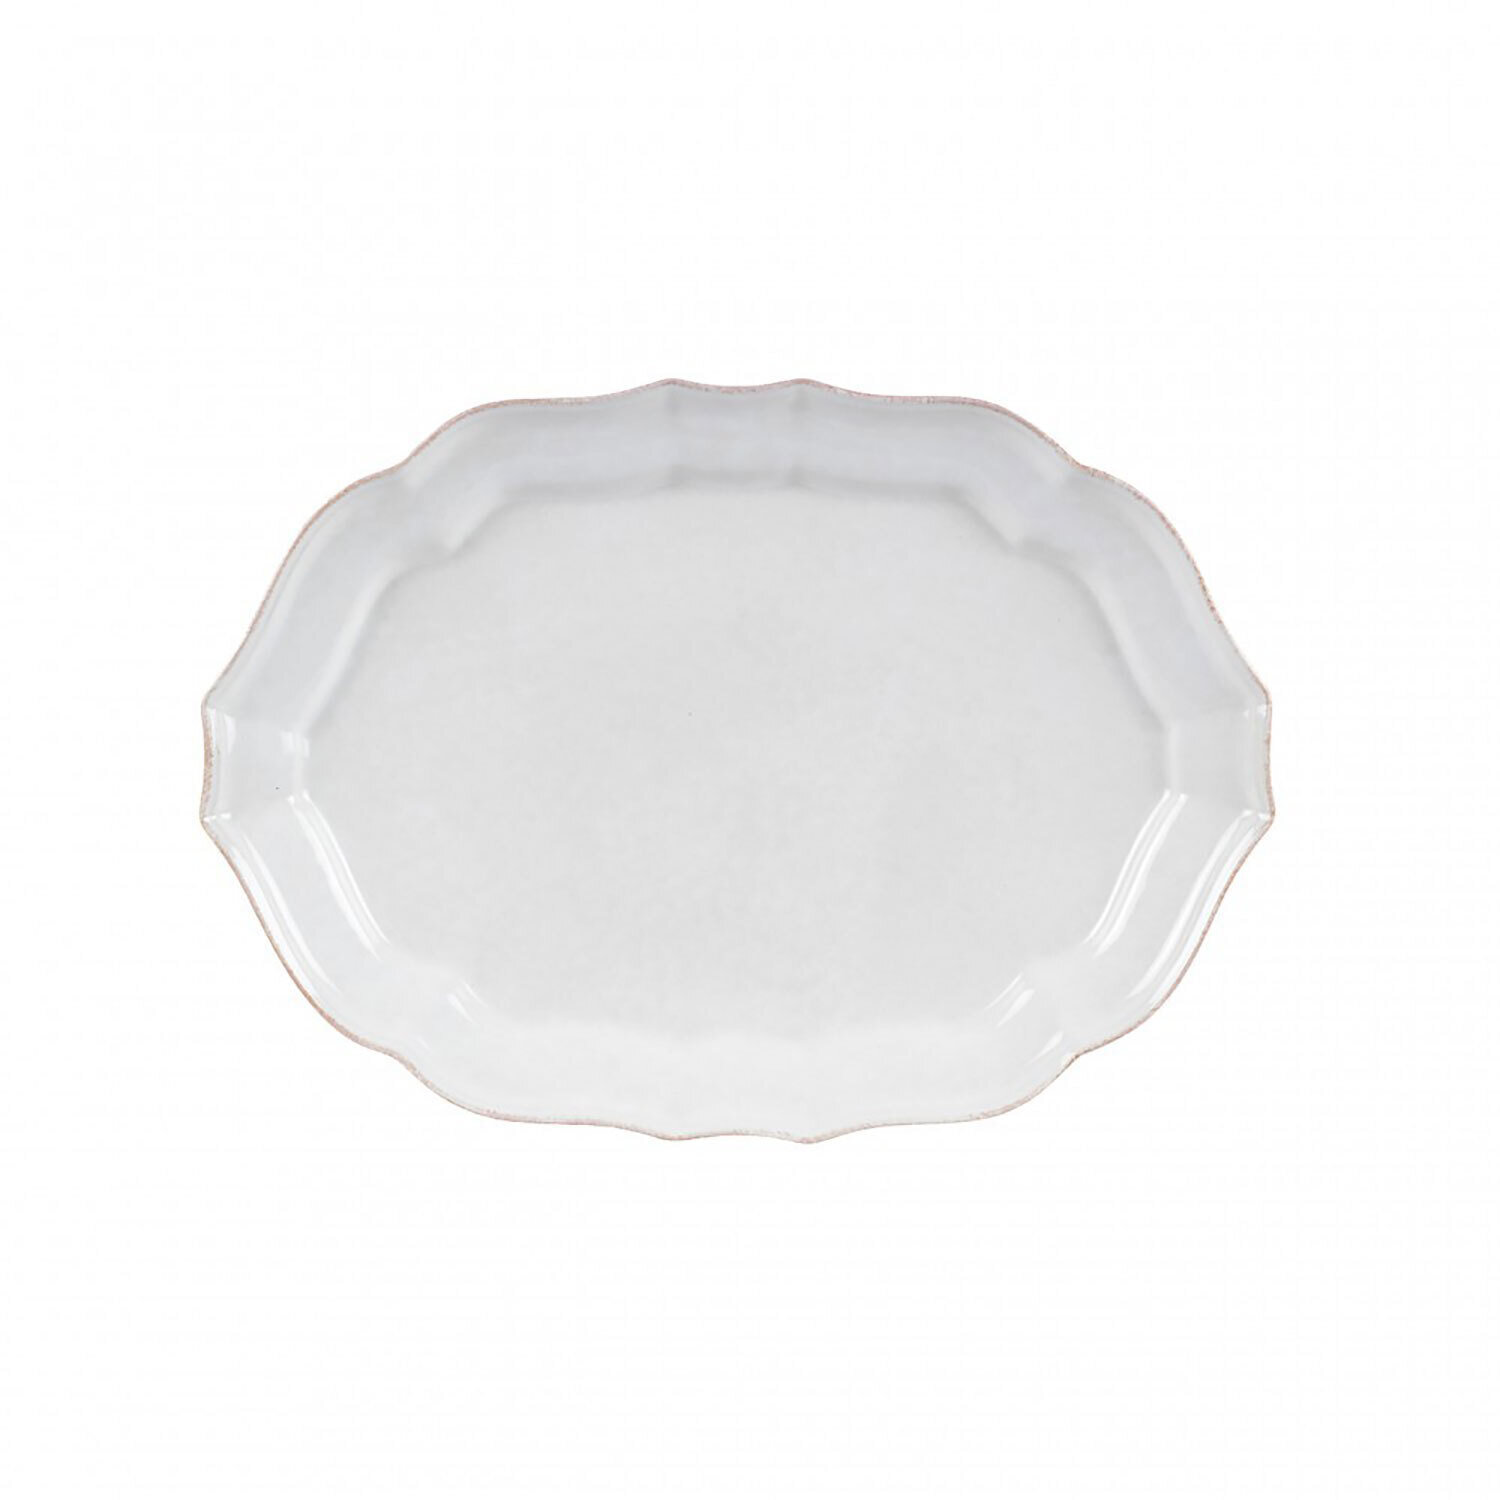 Casafina Impressions White Medium Oval Platter IM534-WHI